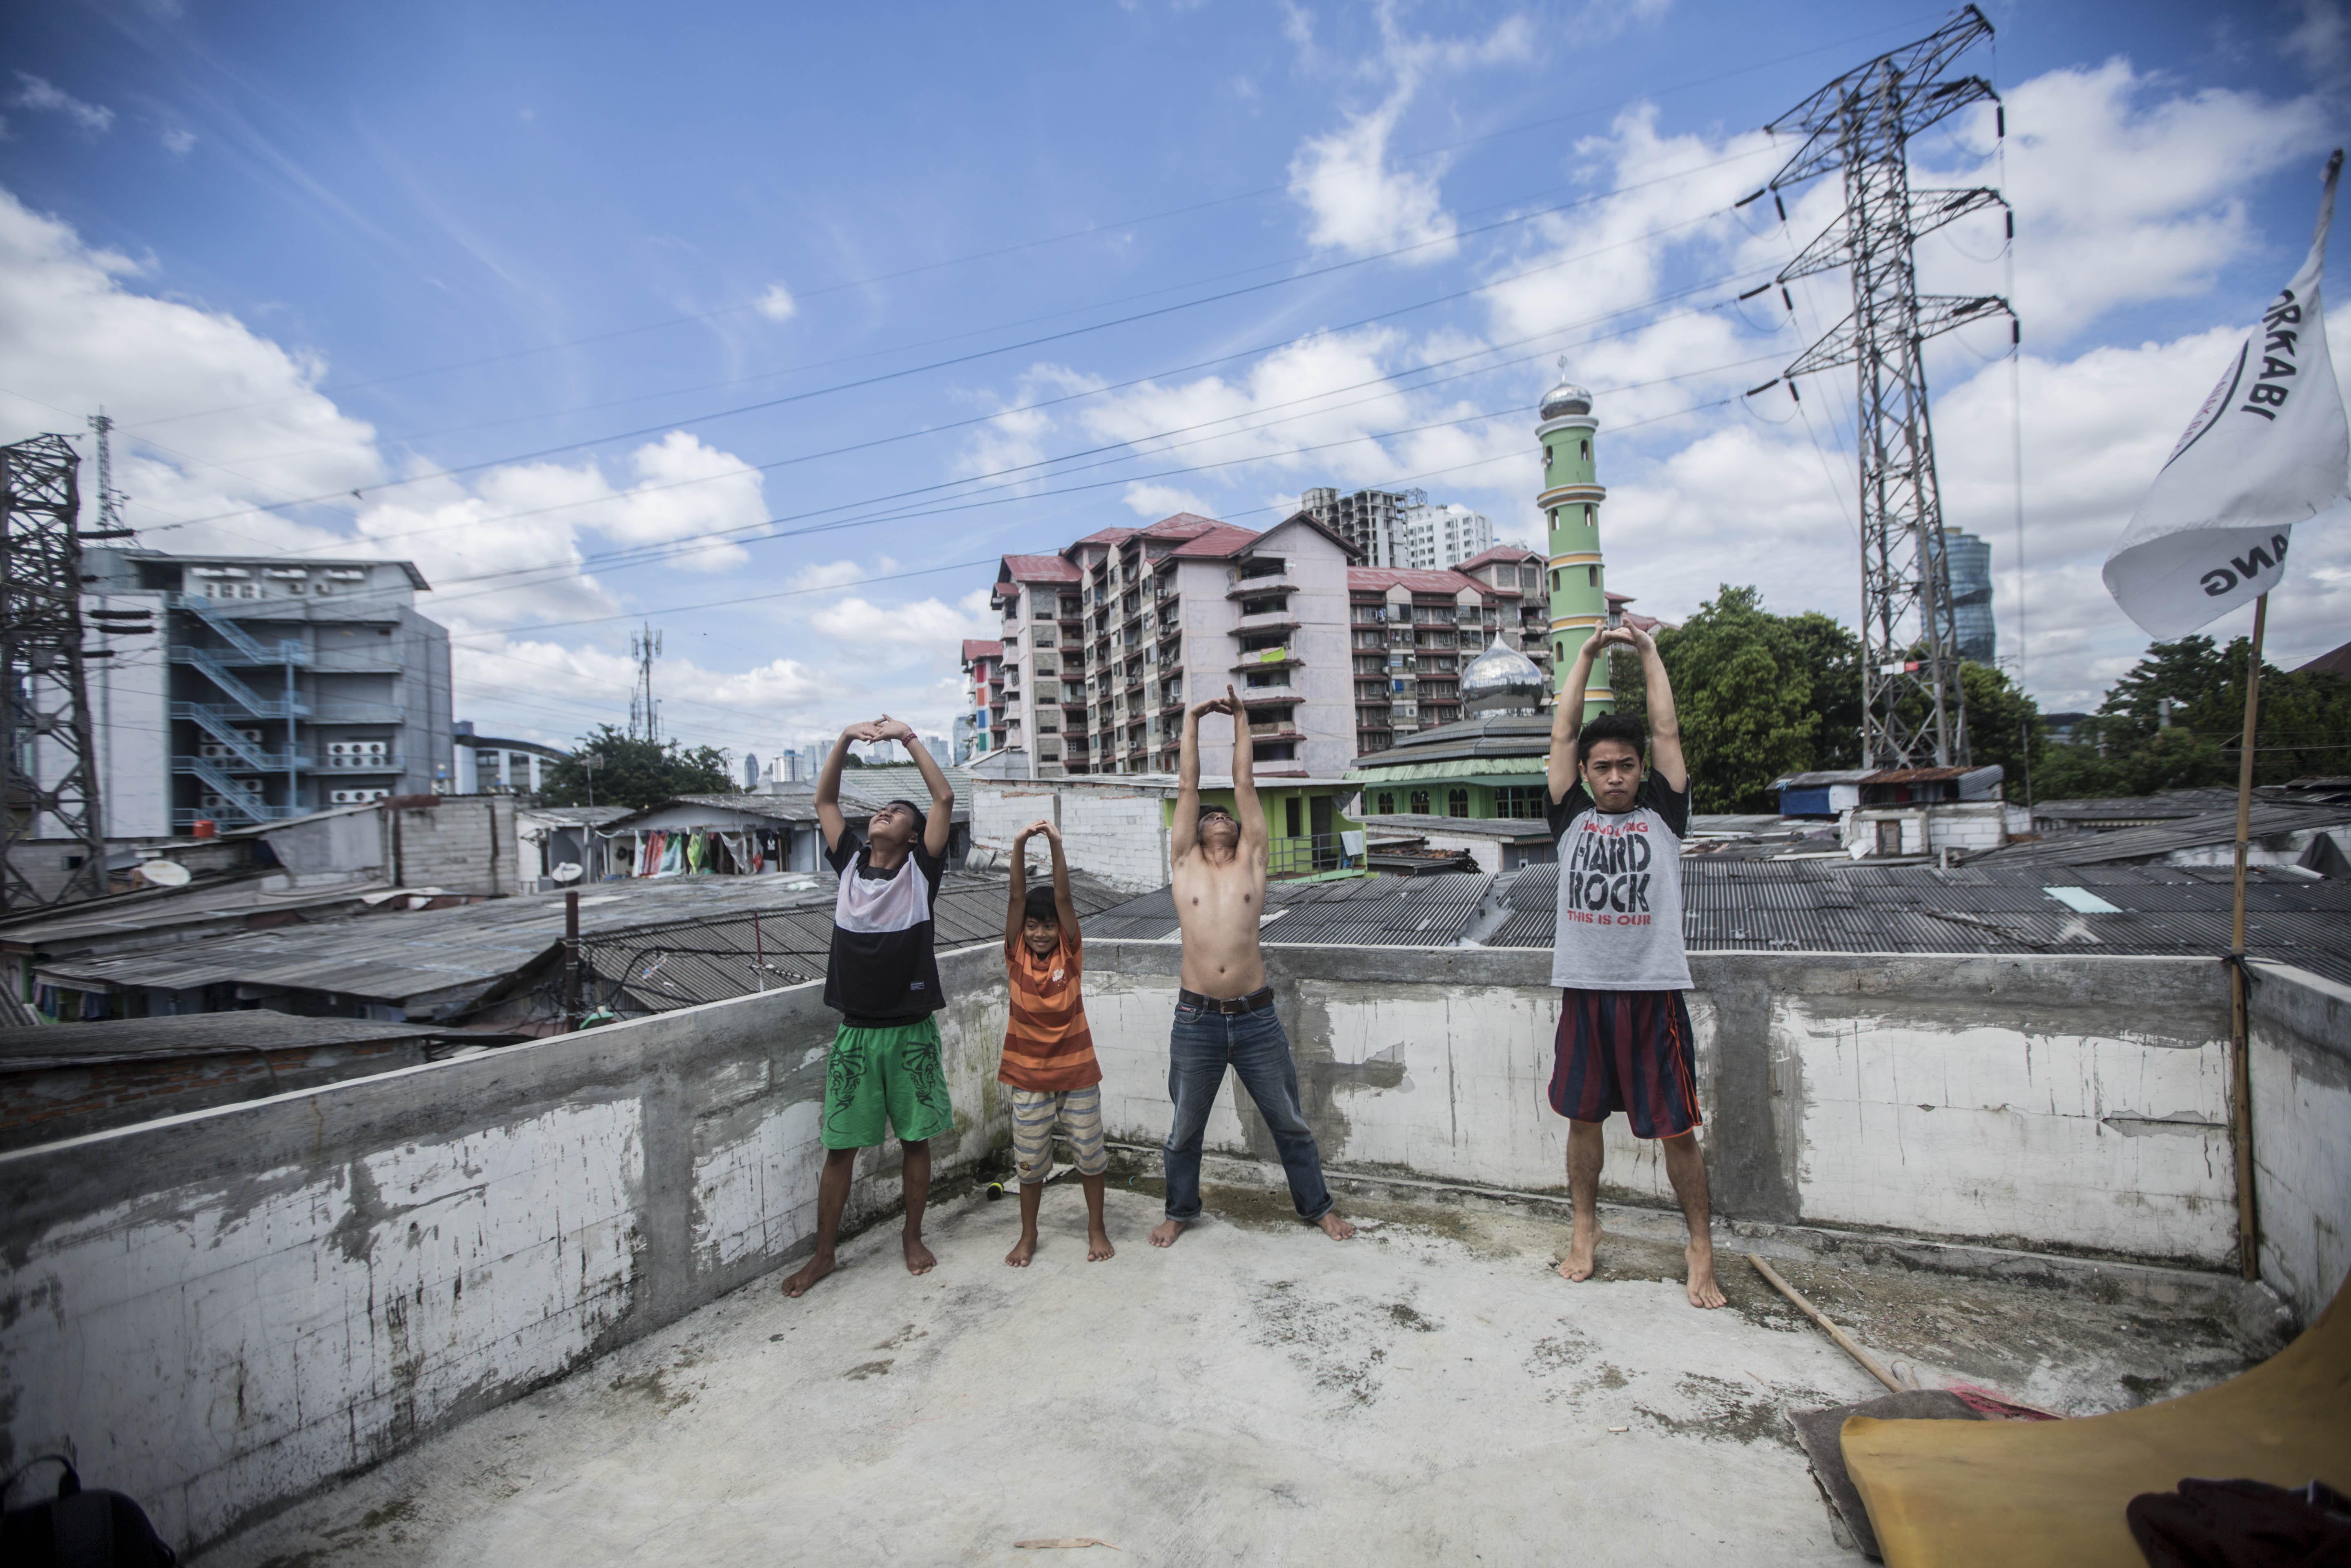 Sejumlah warga berjemur di balkon kawasan pemukiman Penjompongan, Jakarta Pusat, Selasa (7/4/2020). Berjemur diri di bawah sinar matahari di antara pukul 08.00 WIB-11.00 WIB dipercaya warga salah satu upaya yang paling sederhana untuk menjaga kesehatan selama wabah virus corona.